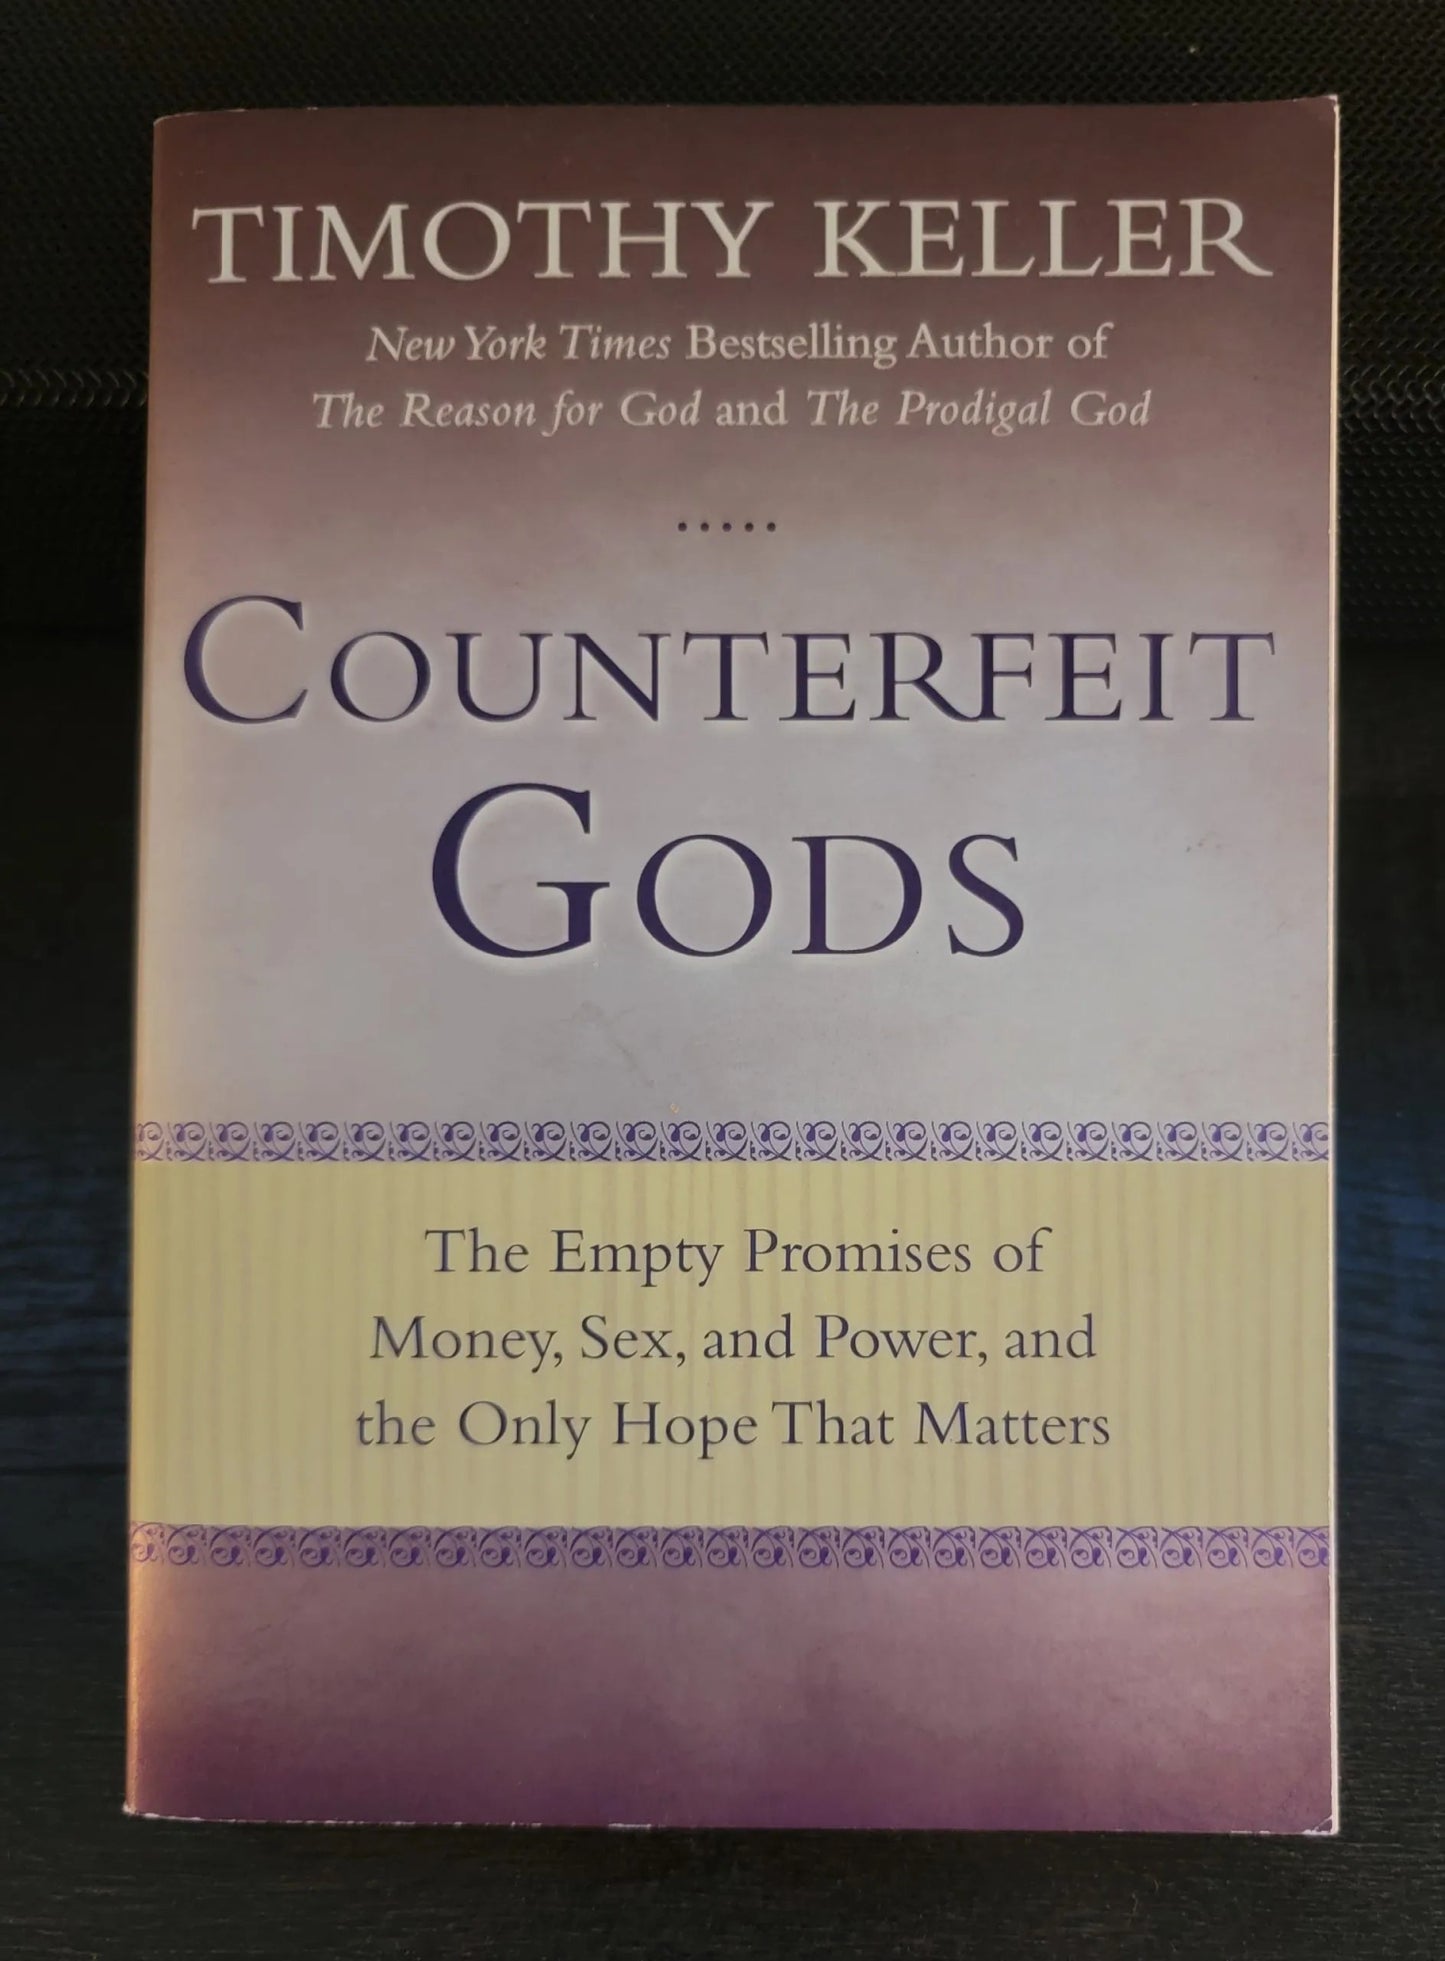 Steady Bunny Shop - Counterfeit Gods - Timothy Keller - Paperback Book - Steady Bunny Shop